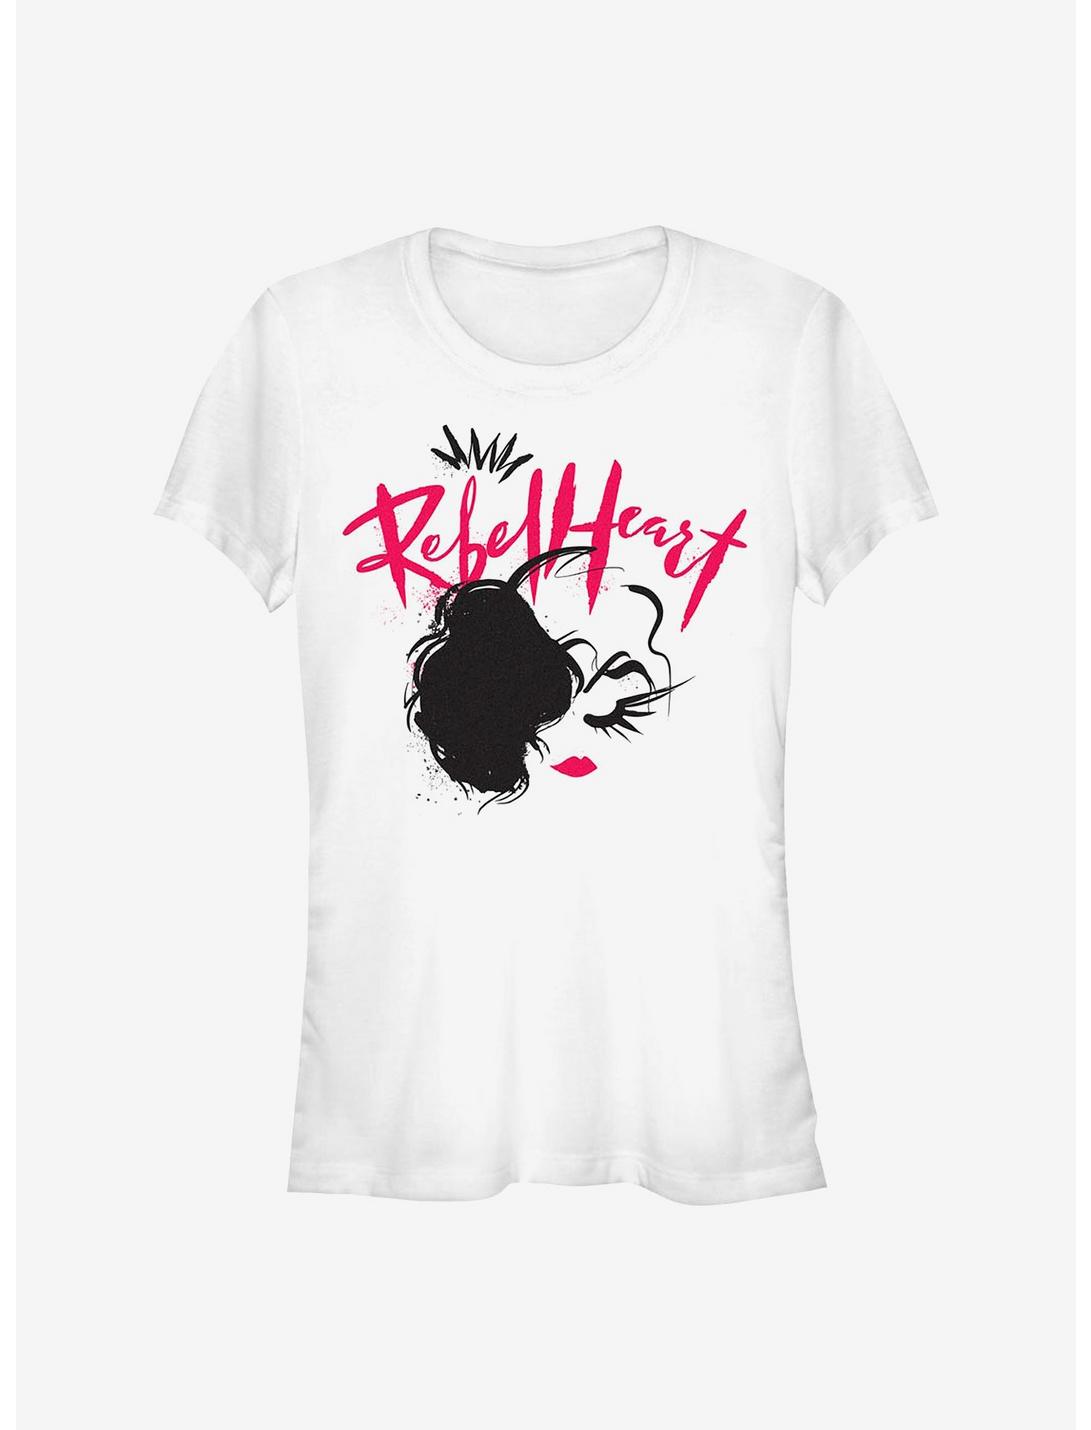 Disney Cruella Rebel Heart Girls T-Shirt Hot Topic Exclusive, WHITE, hi-res